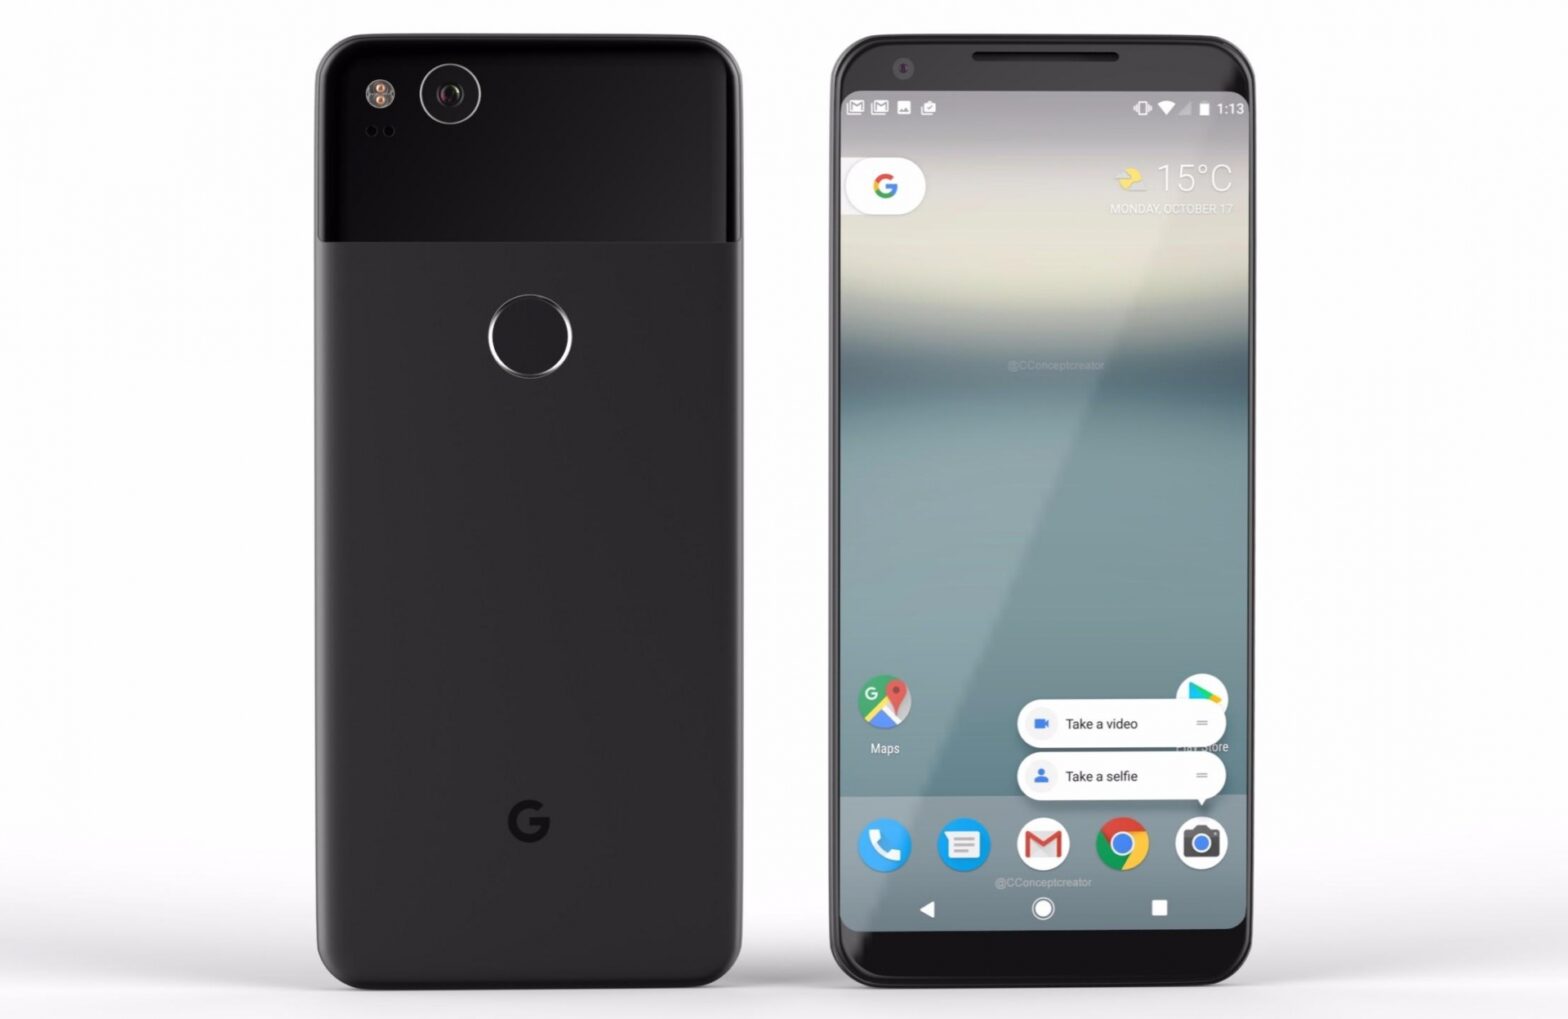 Google Leaked Details Of The Pixel 2 Smartphones